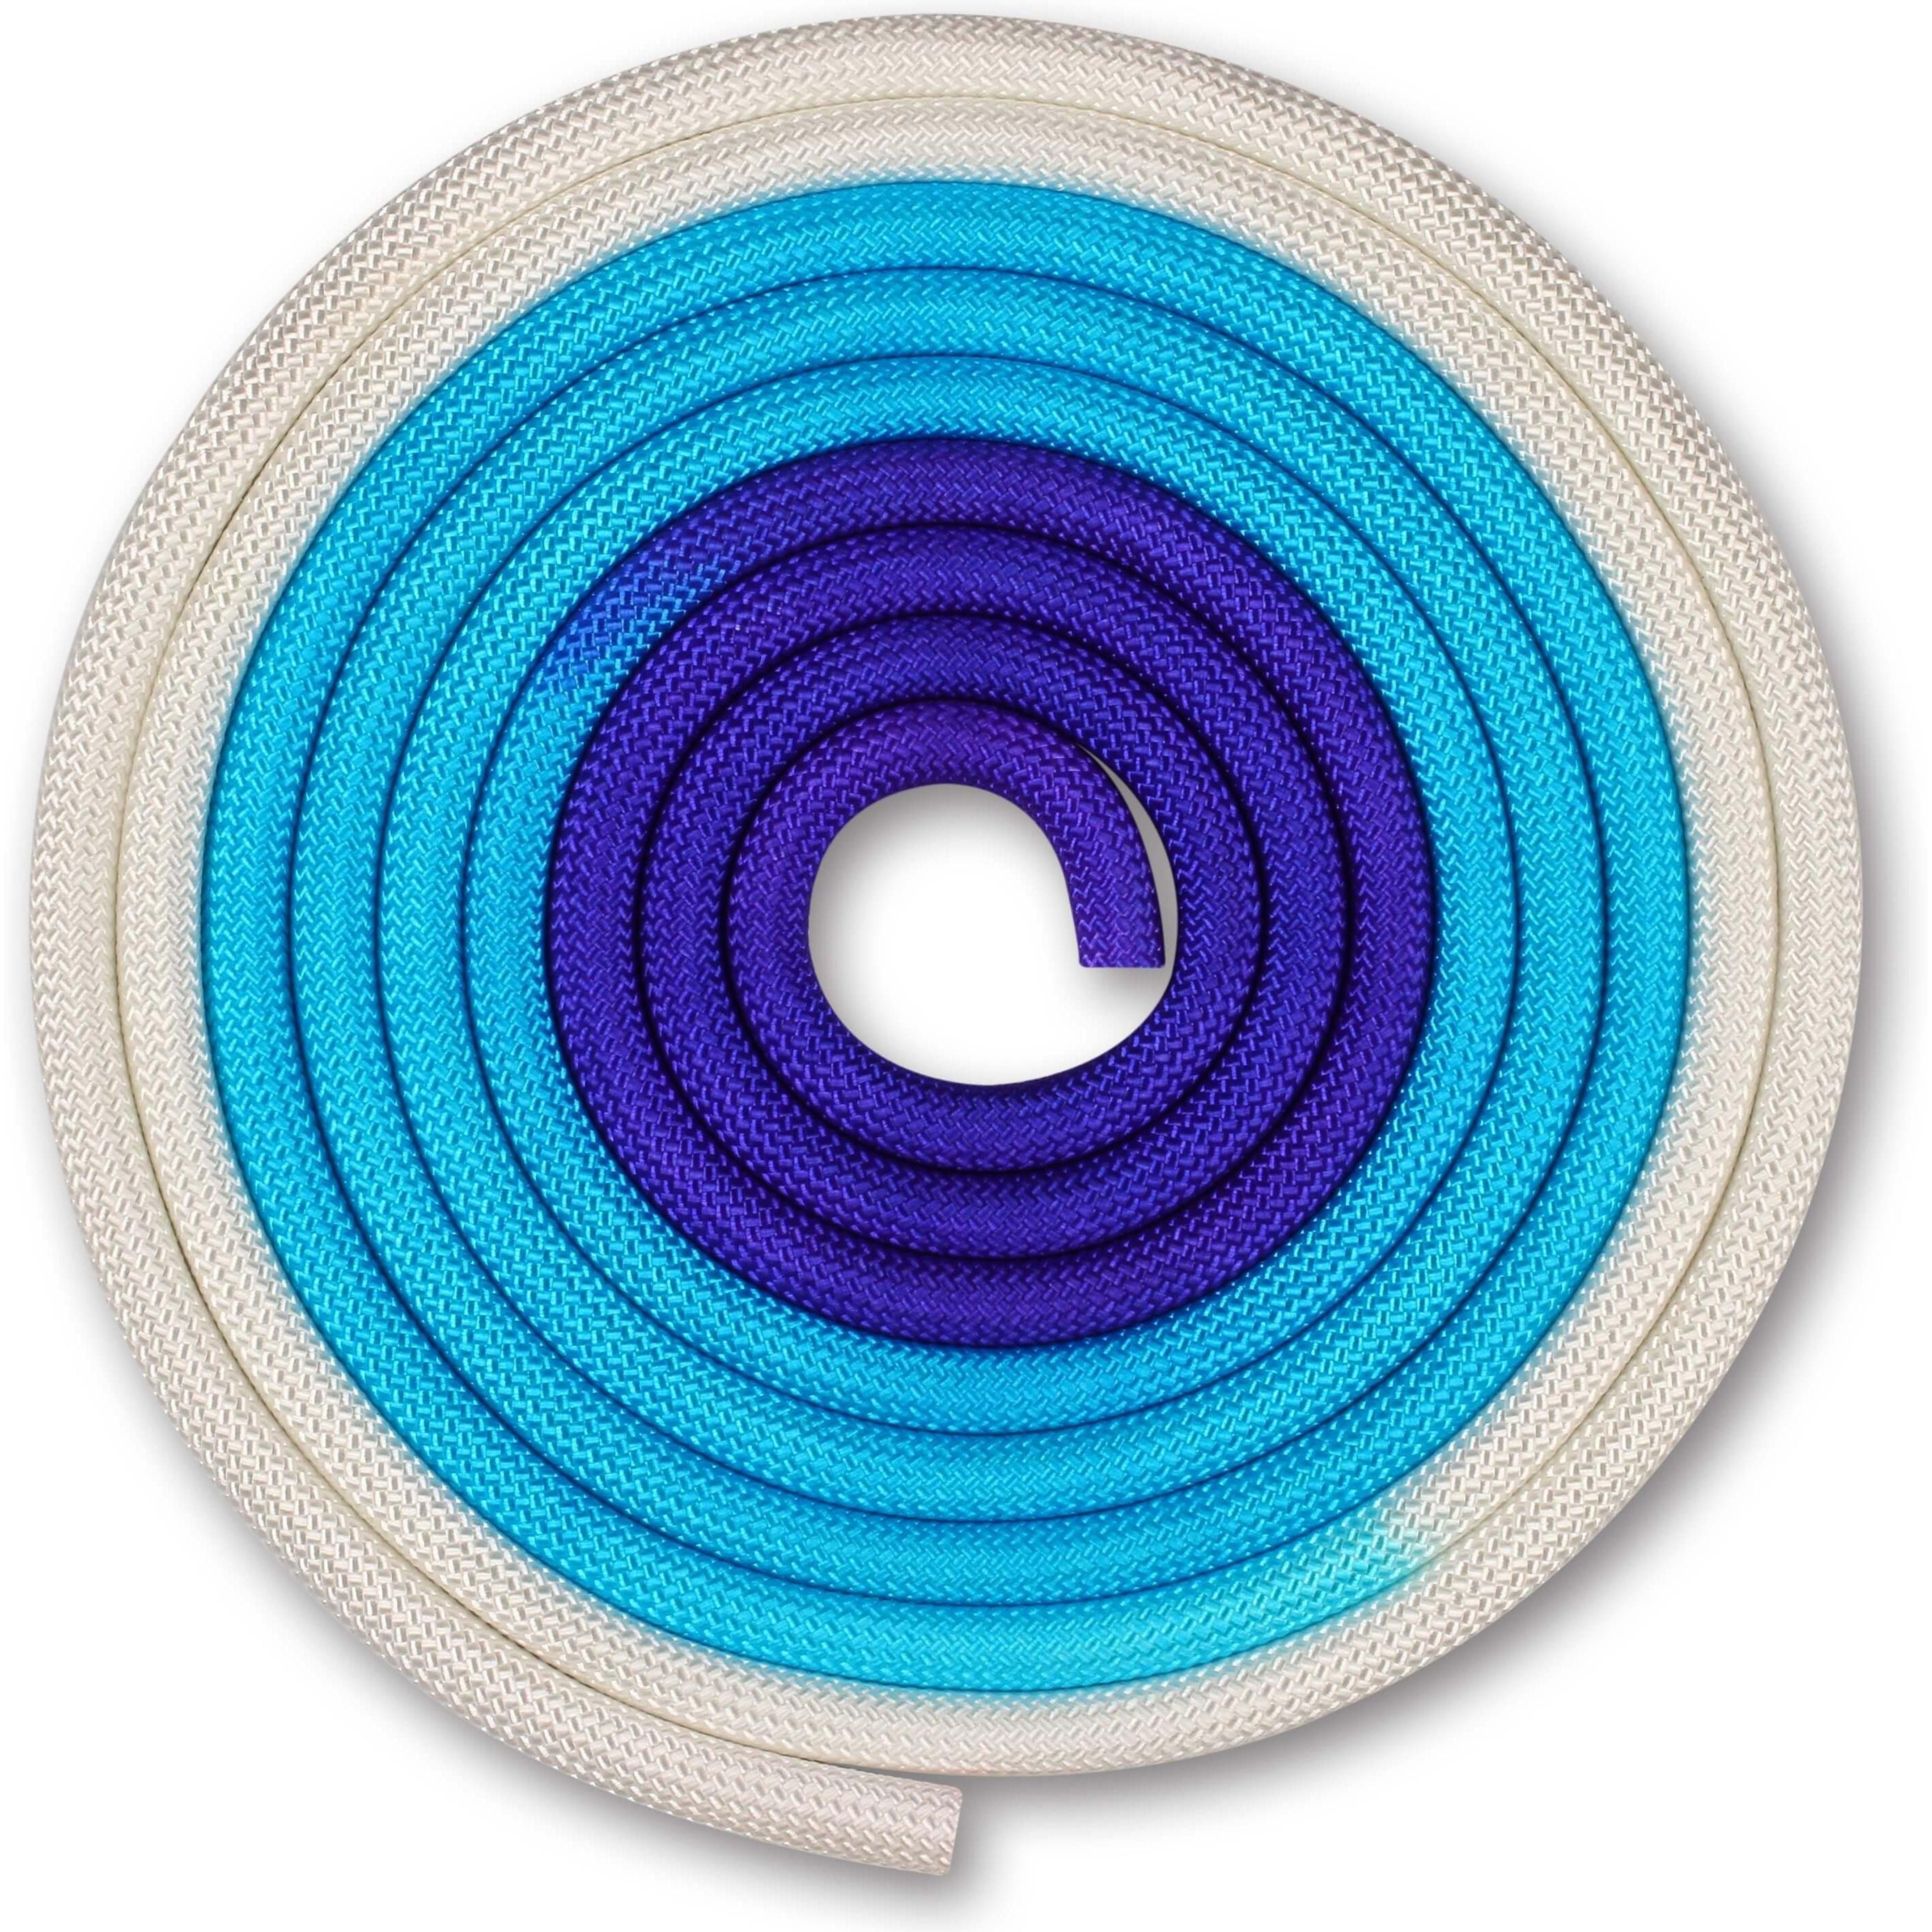 Cuerda para Gimnasia Rítmica Ponderada 165g INDIGO Tricolor 3 m Blanco-Azul-Violeta